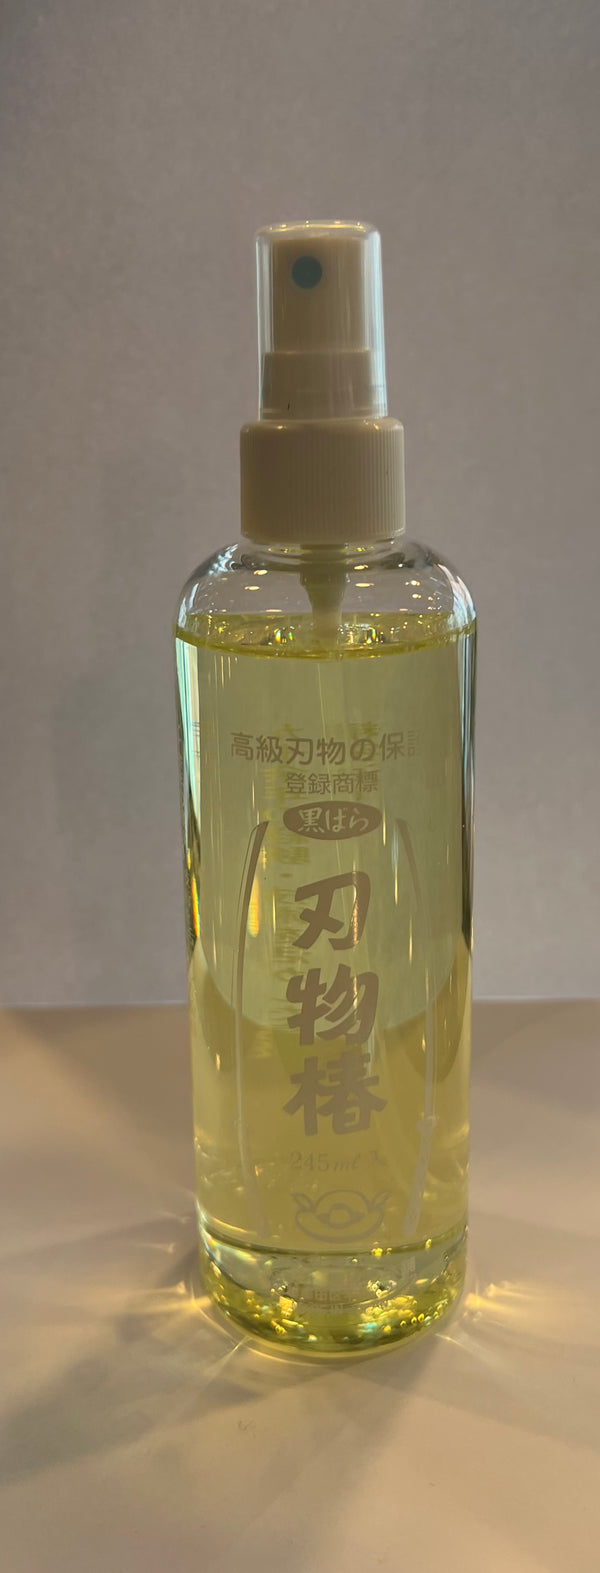 Camelia oil 245 ml